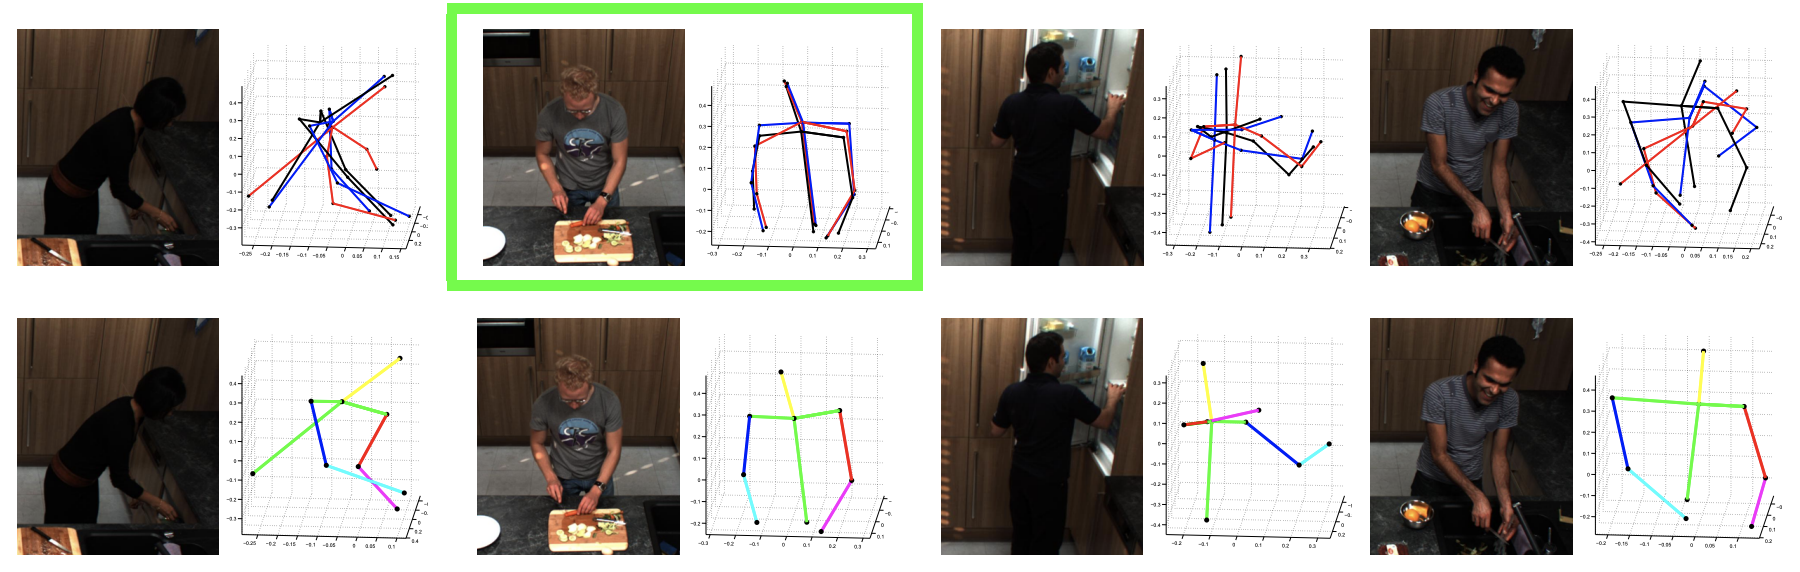 Insights Regarding Pose Estimation | by Mustafa Gültekin | Towards AI